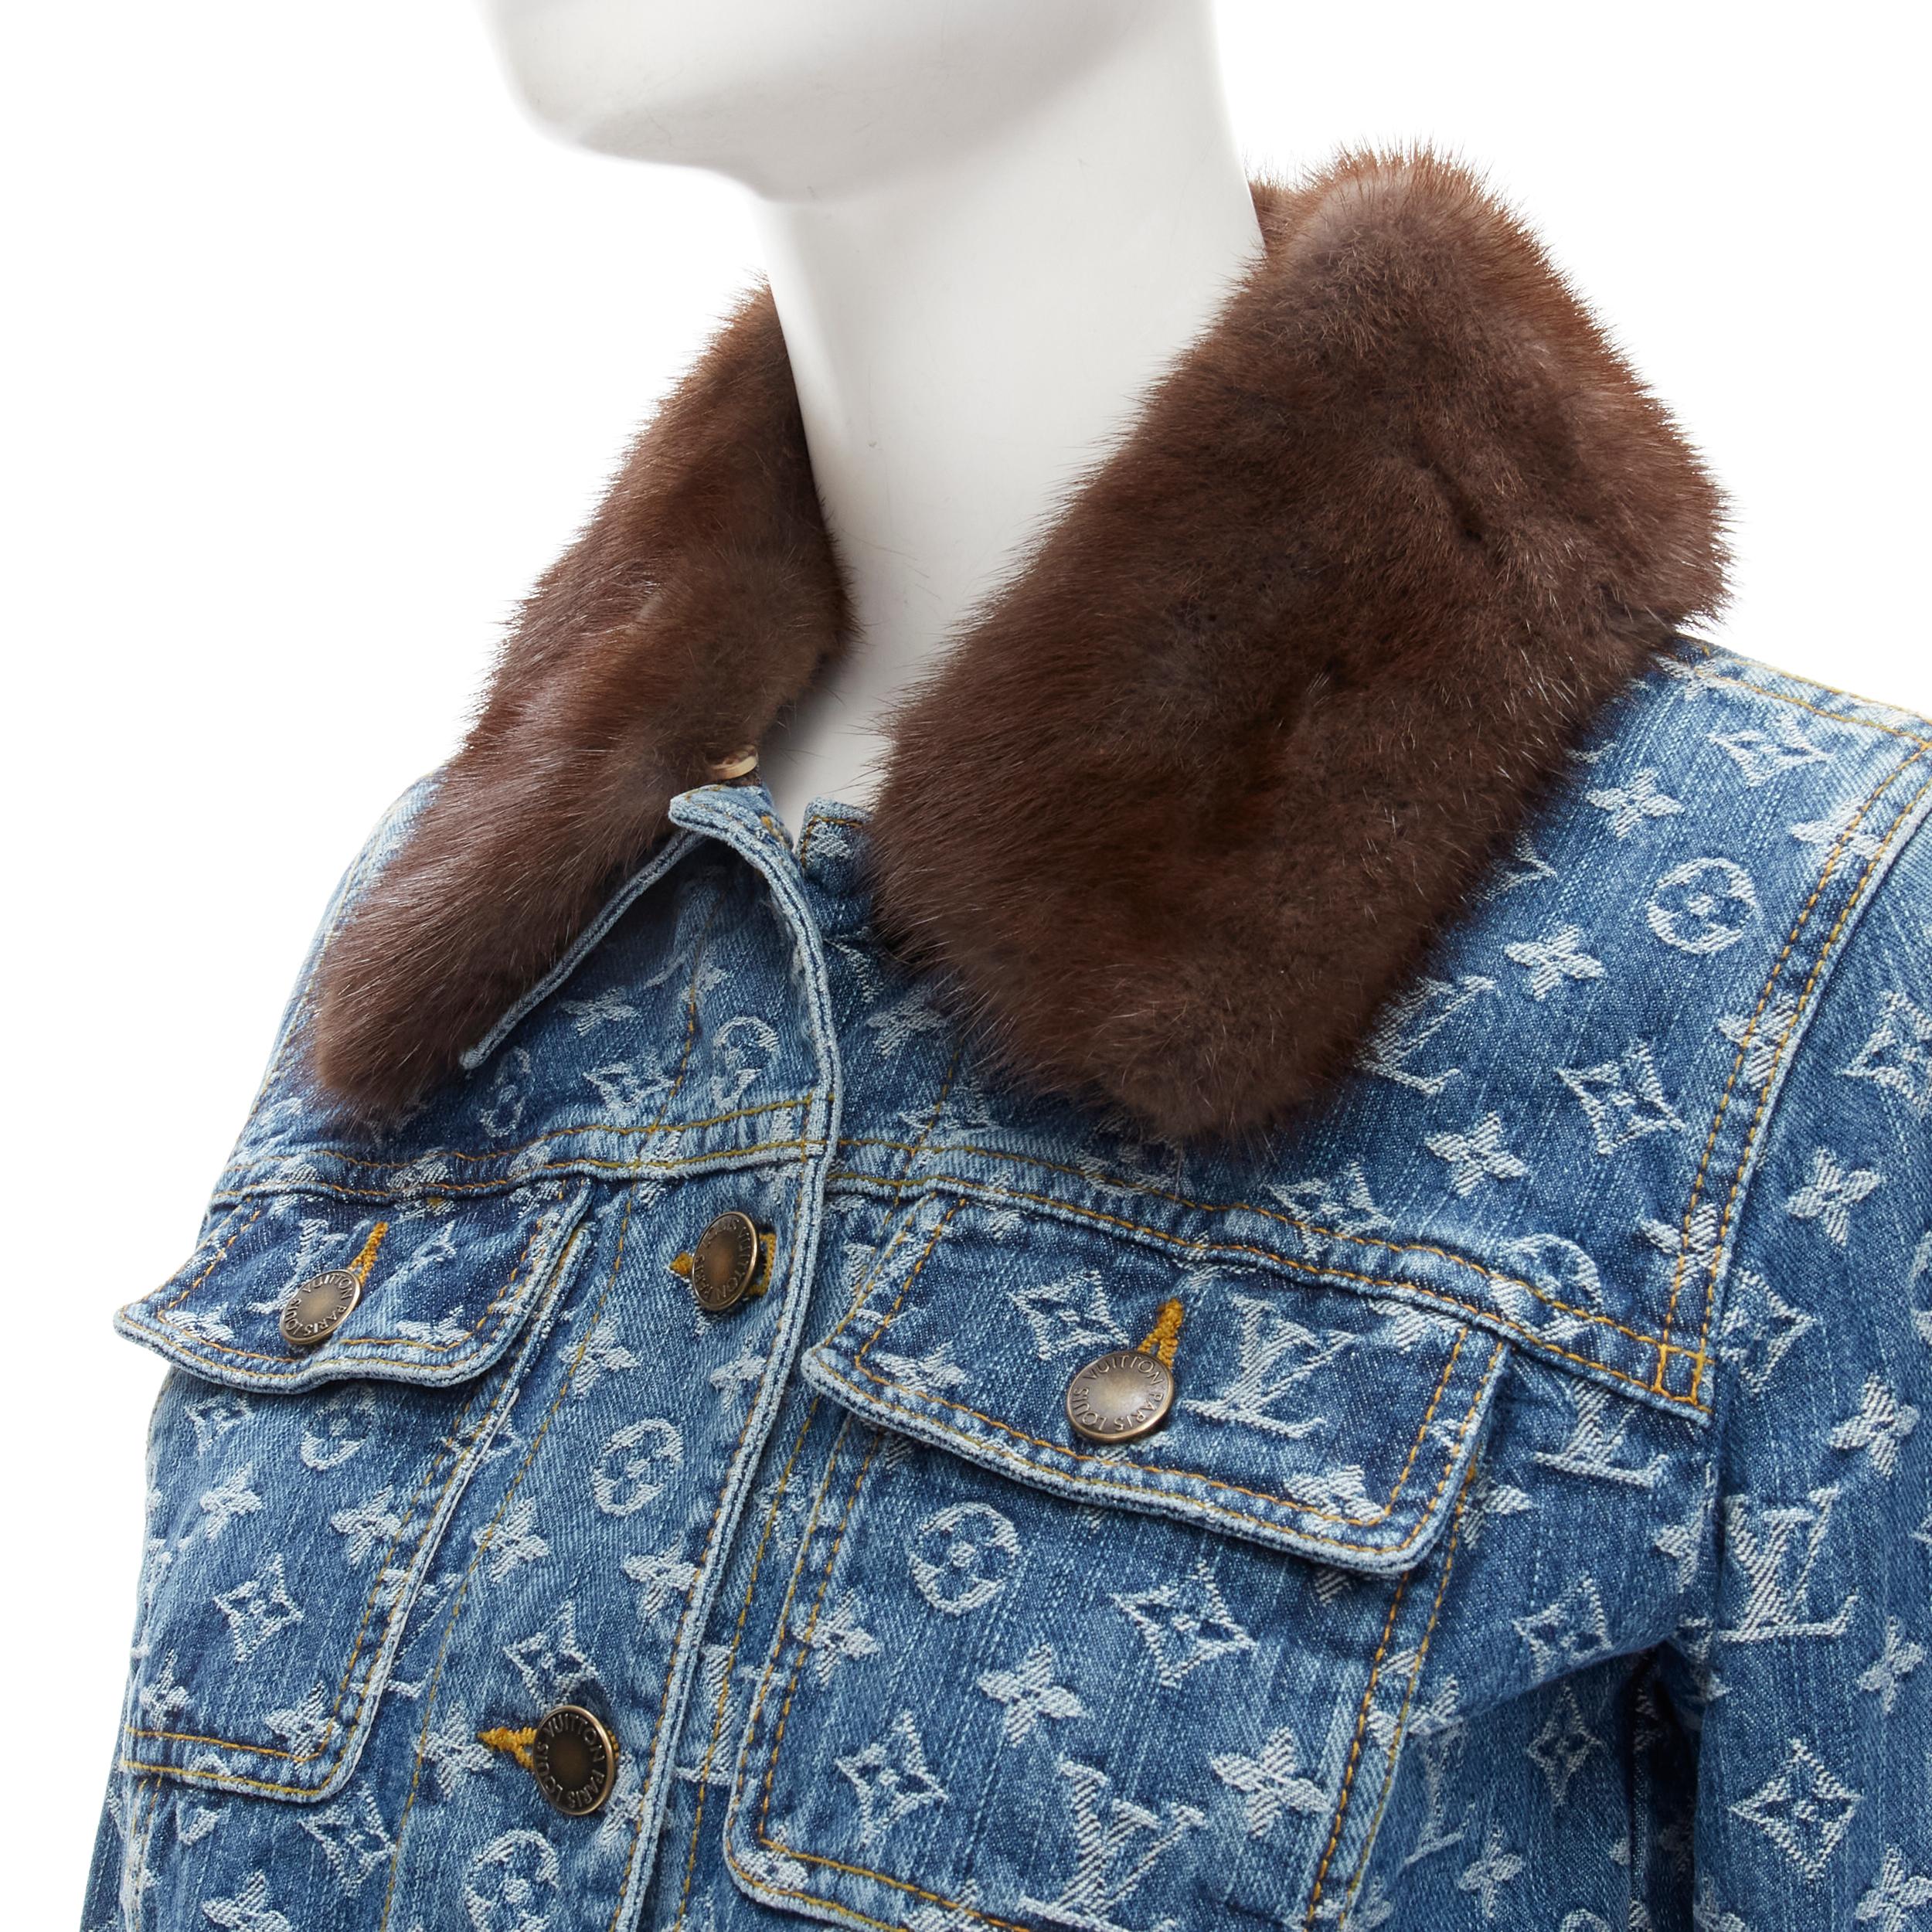 Louis Vuitton Blue Monogram Distressed Floral Workwear Jacket